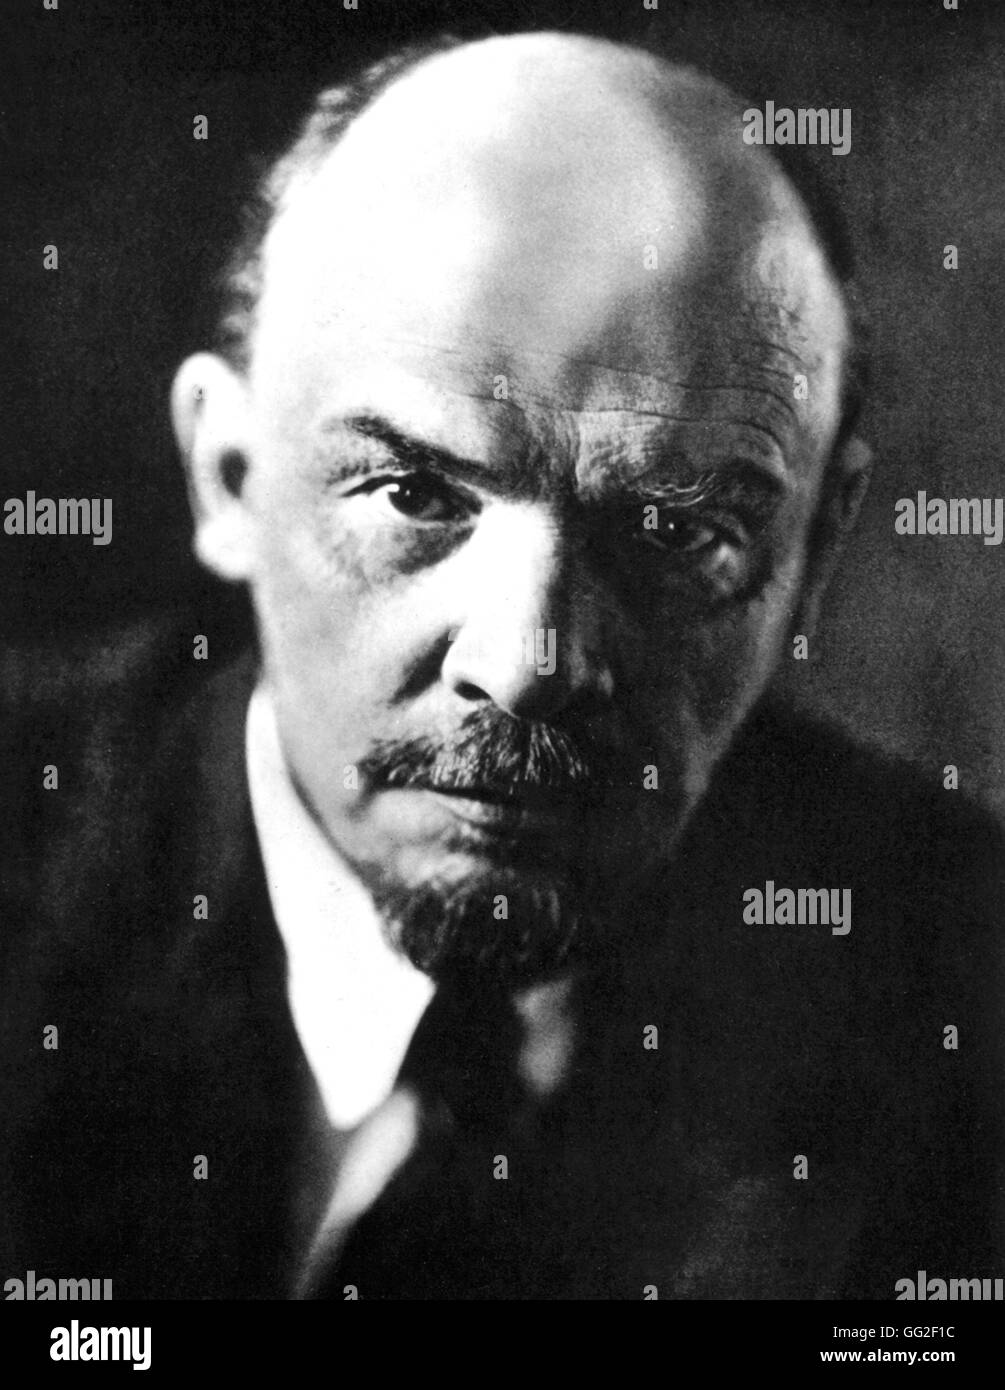 Moscú. Retrato de Lenin de julio de 1920 la URSS Foto de stock